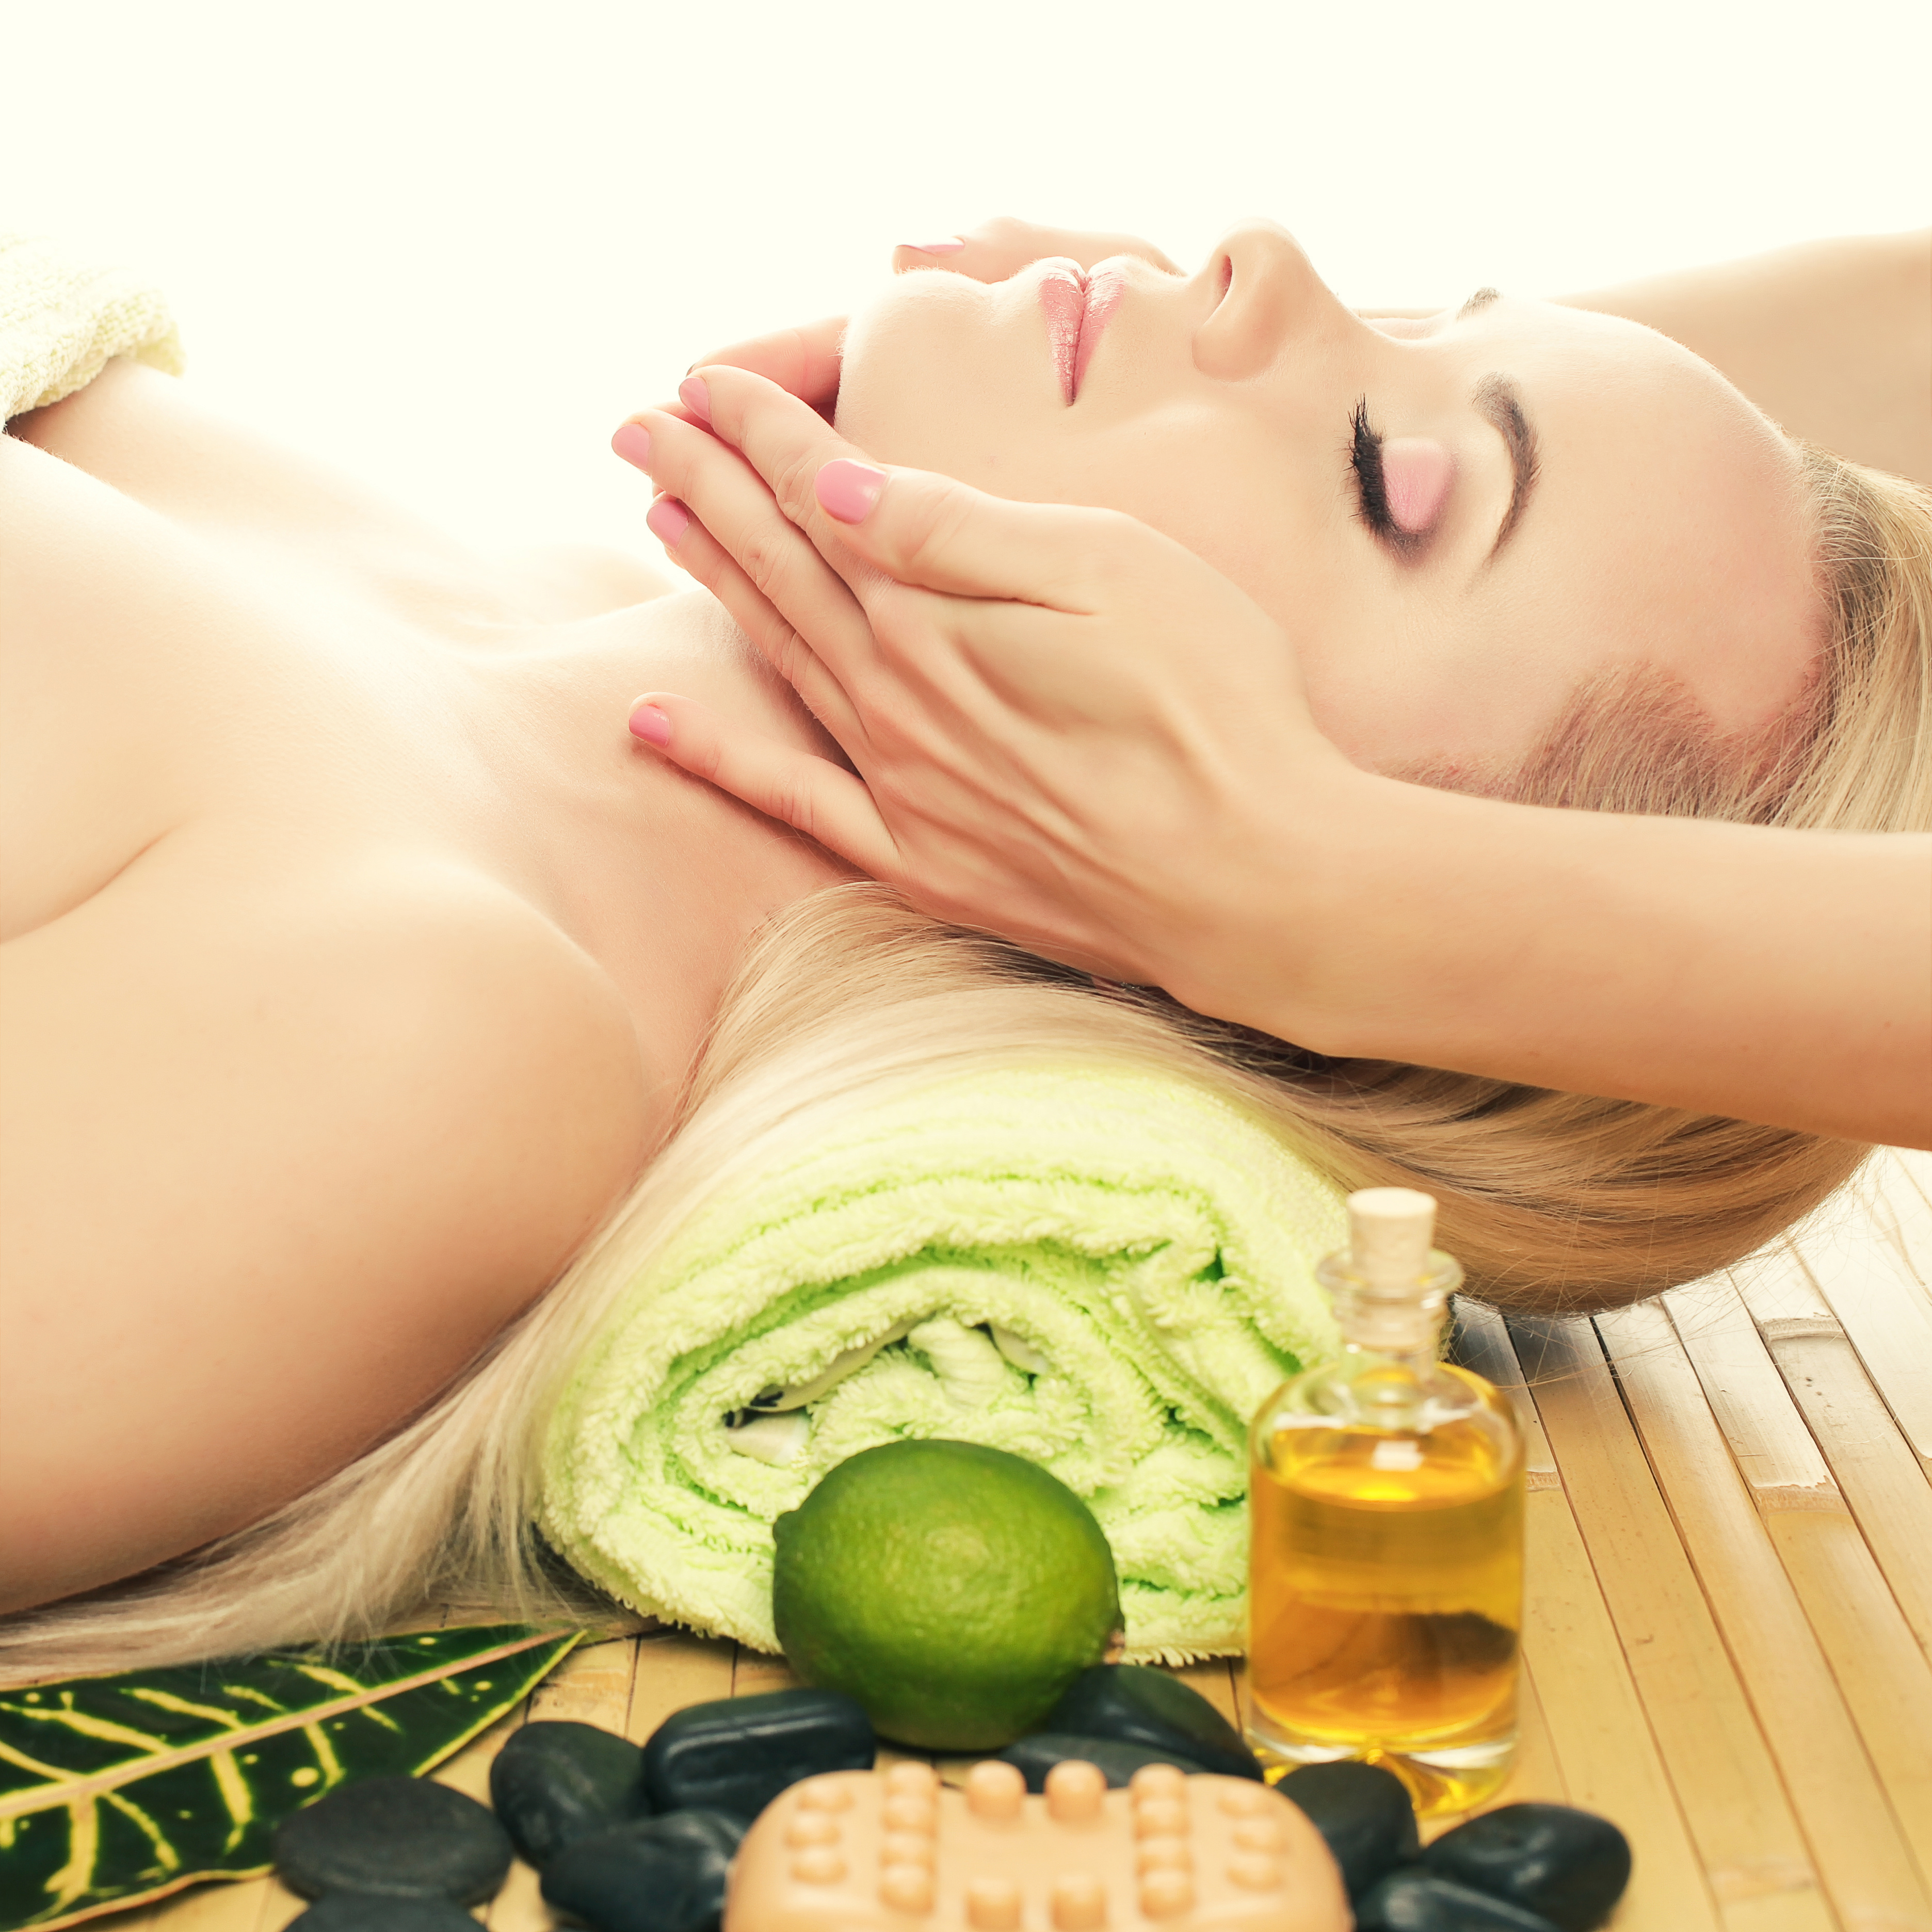 A beautiful young woman receiving facial massage at a spa salon